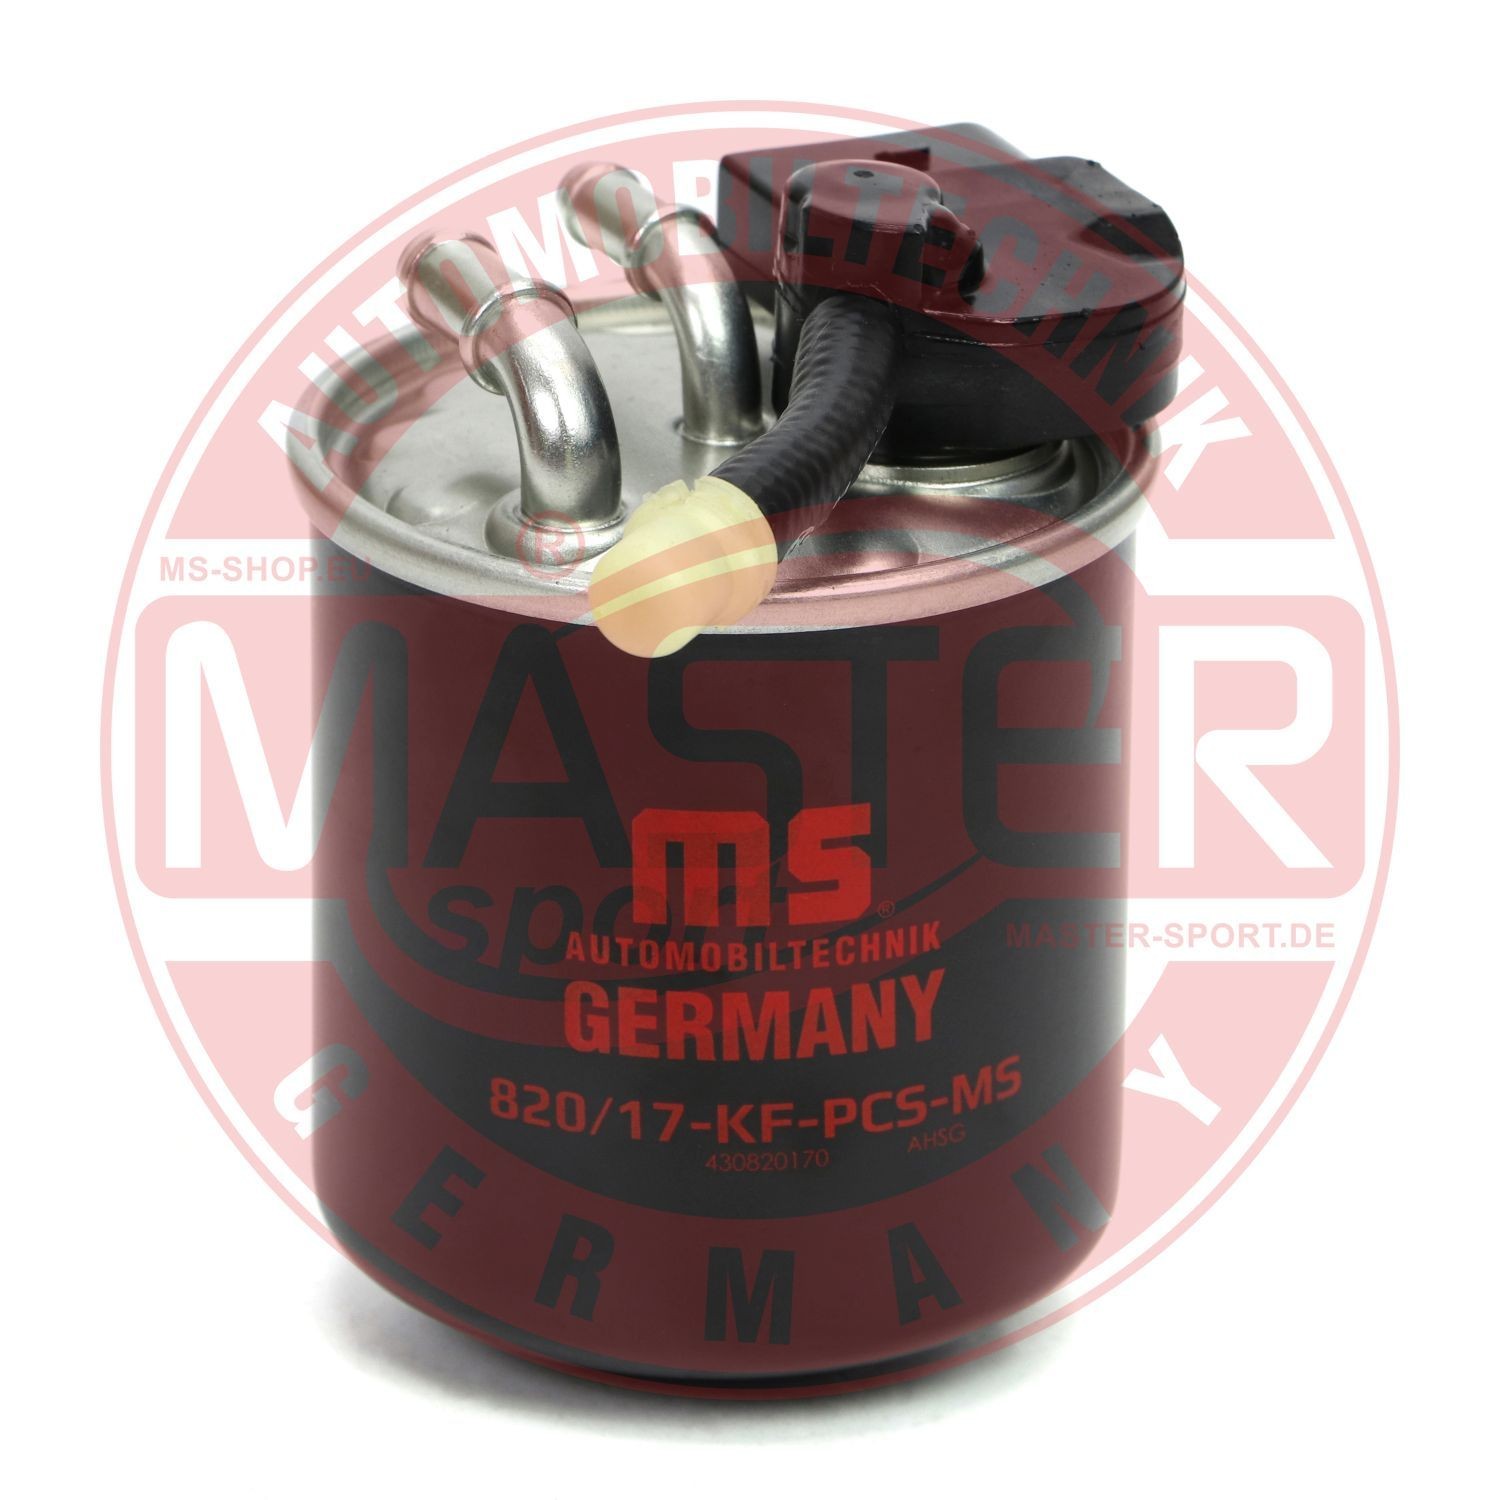 MASTER-SPORT 820/17-KF-PCS-MS Fuel filter In-Line Filter, 10mm, 8mm